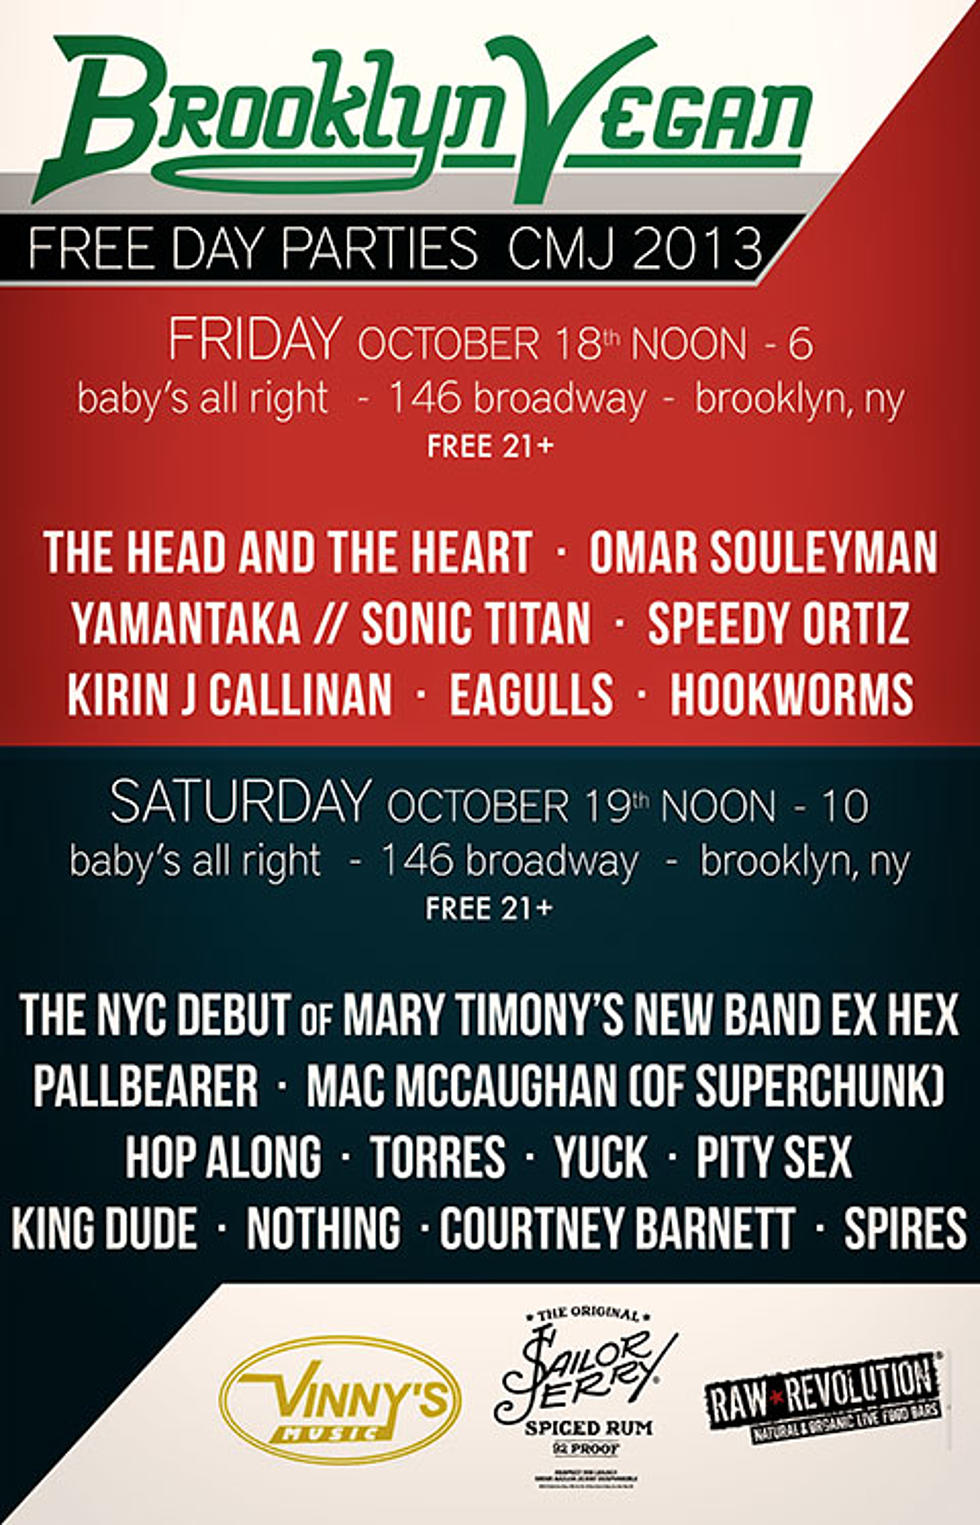 BrooklynVegan hosts FREE CMJ shows Friday and Saturday (eighteen artist lineup &#8212; free drinks &#038; tattoos)